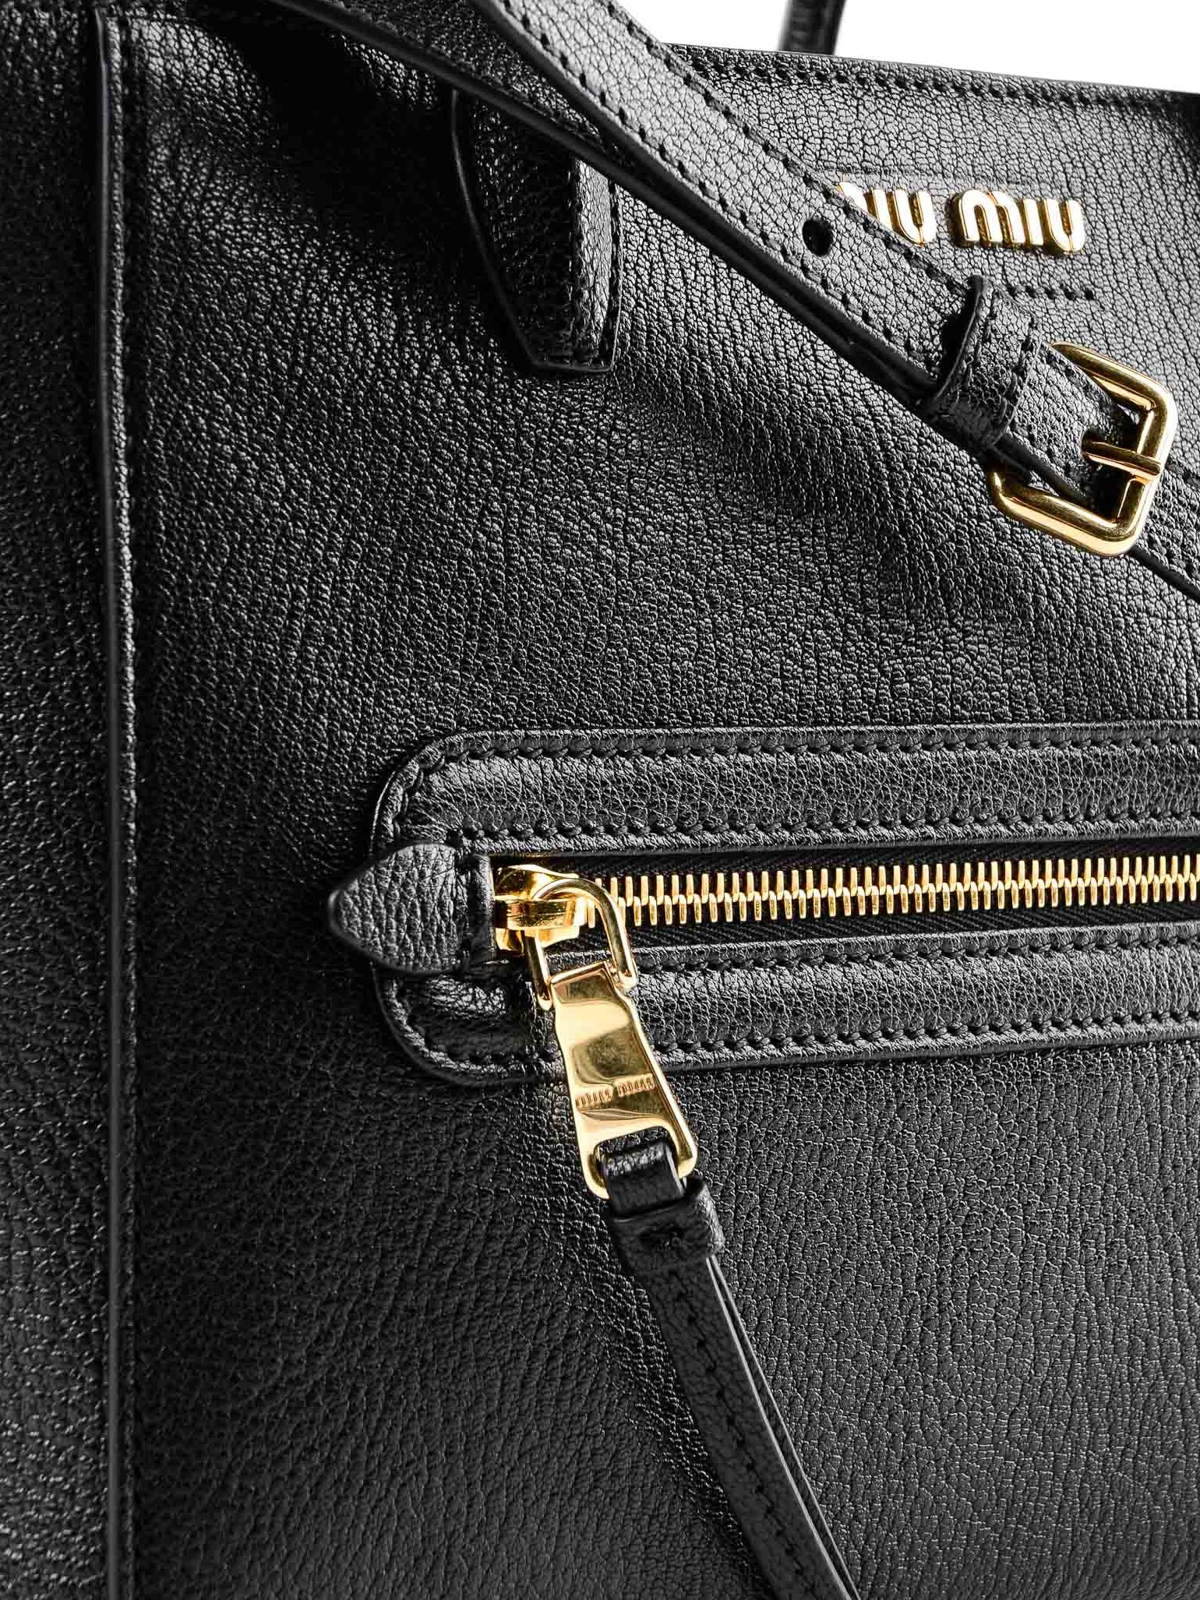 Miu Miu, Bags, Miu Miu Black Leather Mini Madras Top Handle Bag